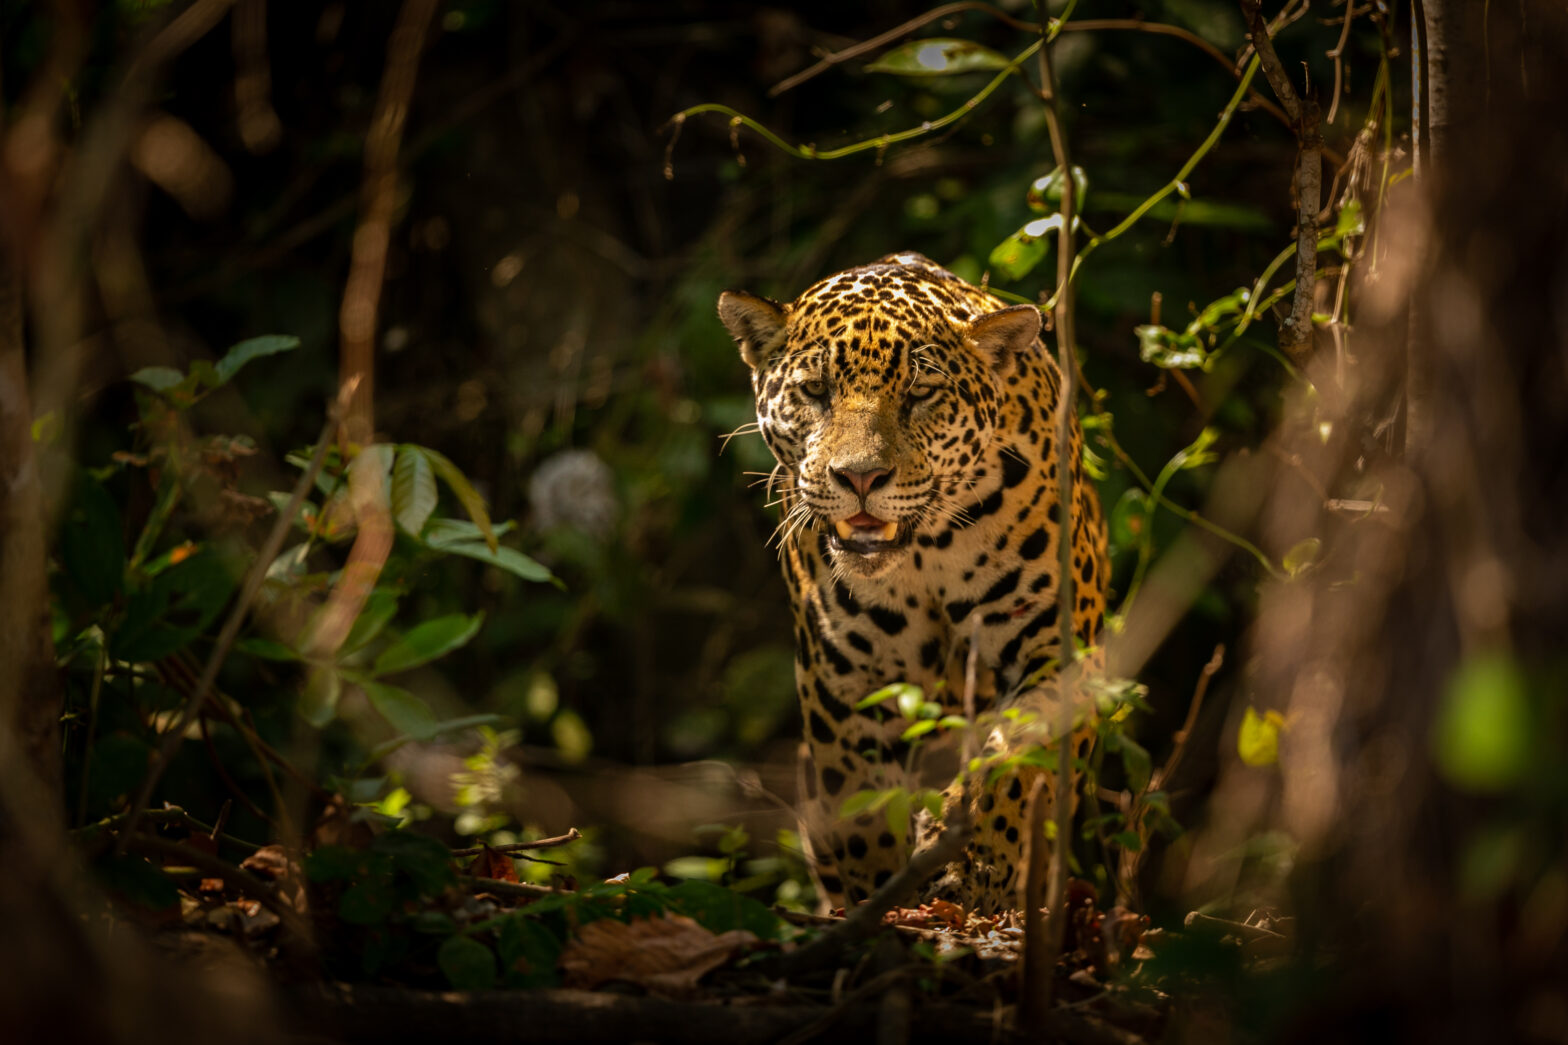 Exciting Pantanal Safari Adventures Await in South America